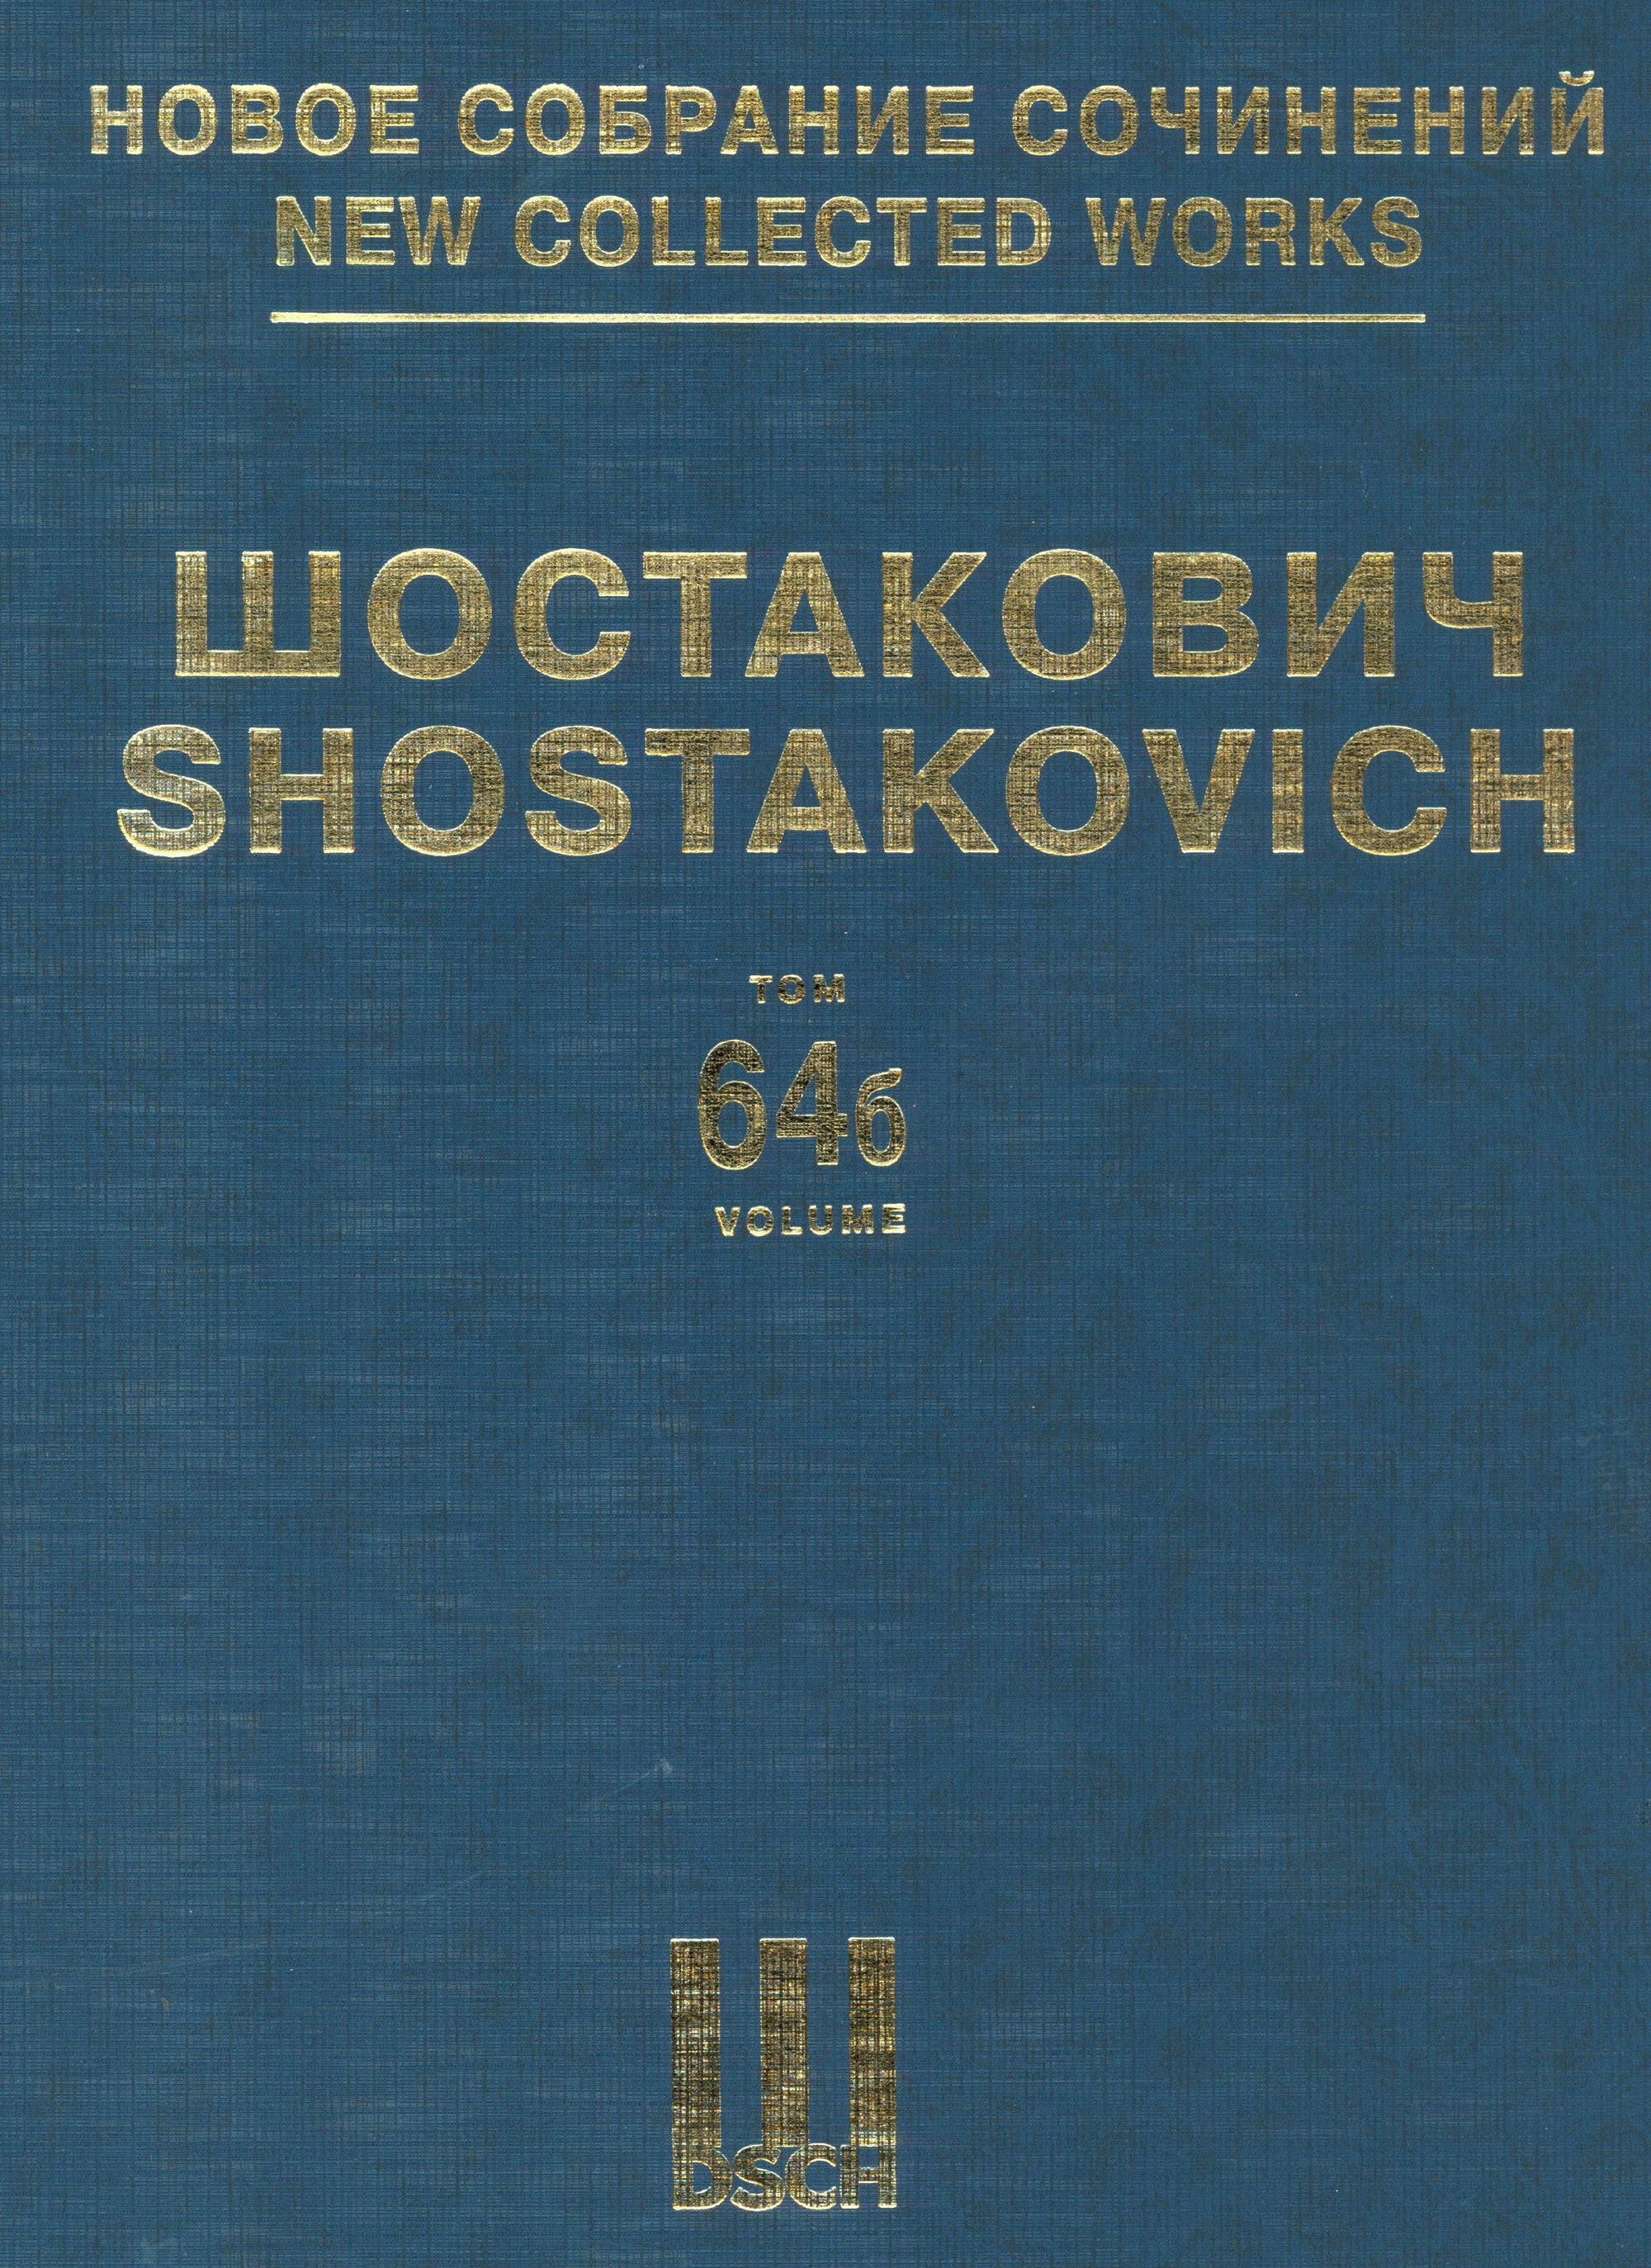 Shostakovich: The Limpid Stream, Op. 39